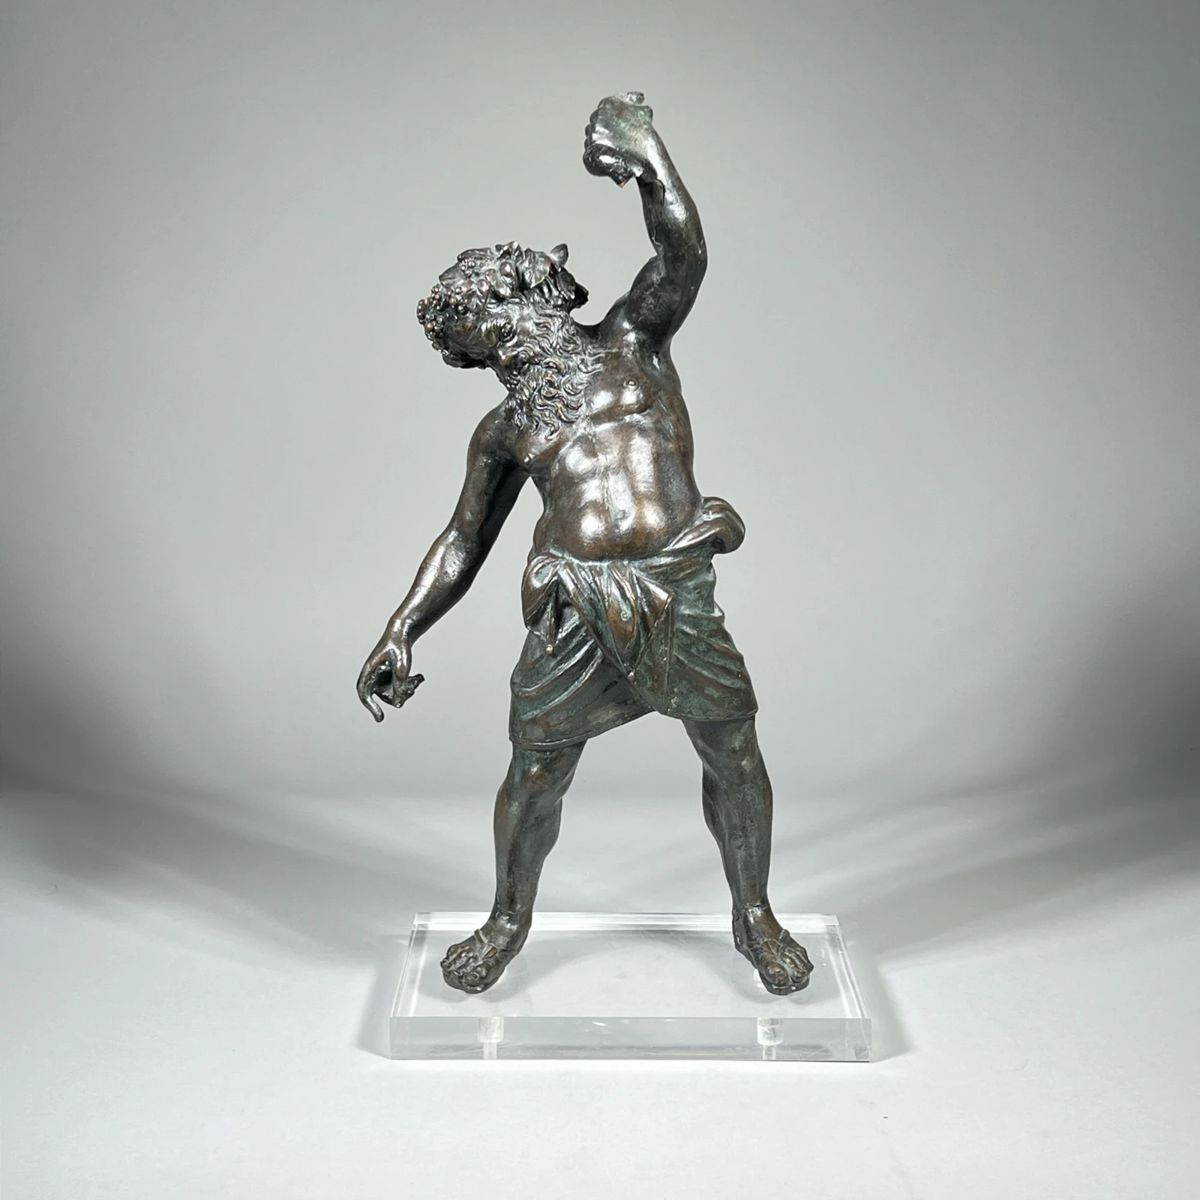 BRONZED GREEK FIGURE | Figure of Silenus, Greek God of Wine on acrylic base, bronzed or bronze finish over composition.